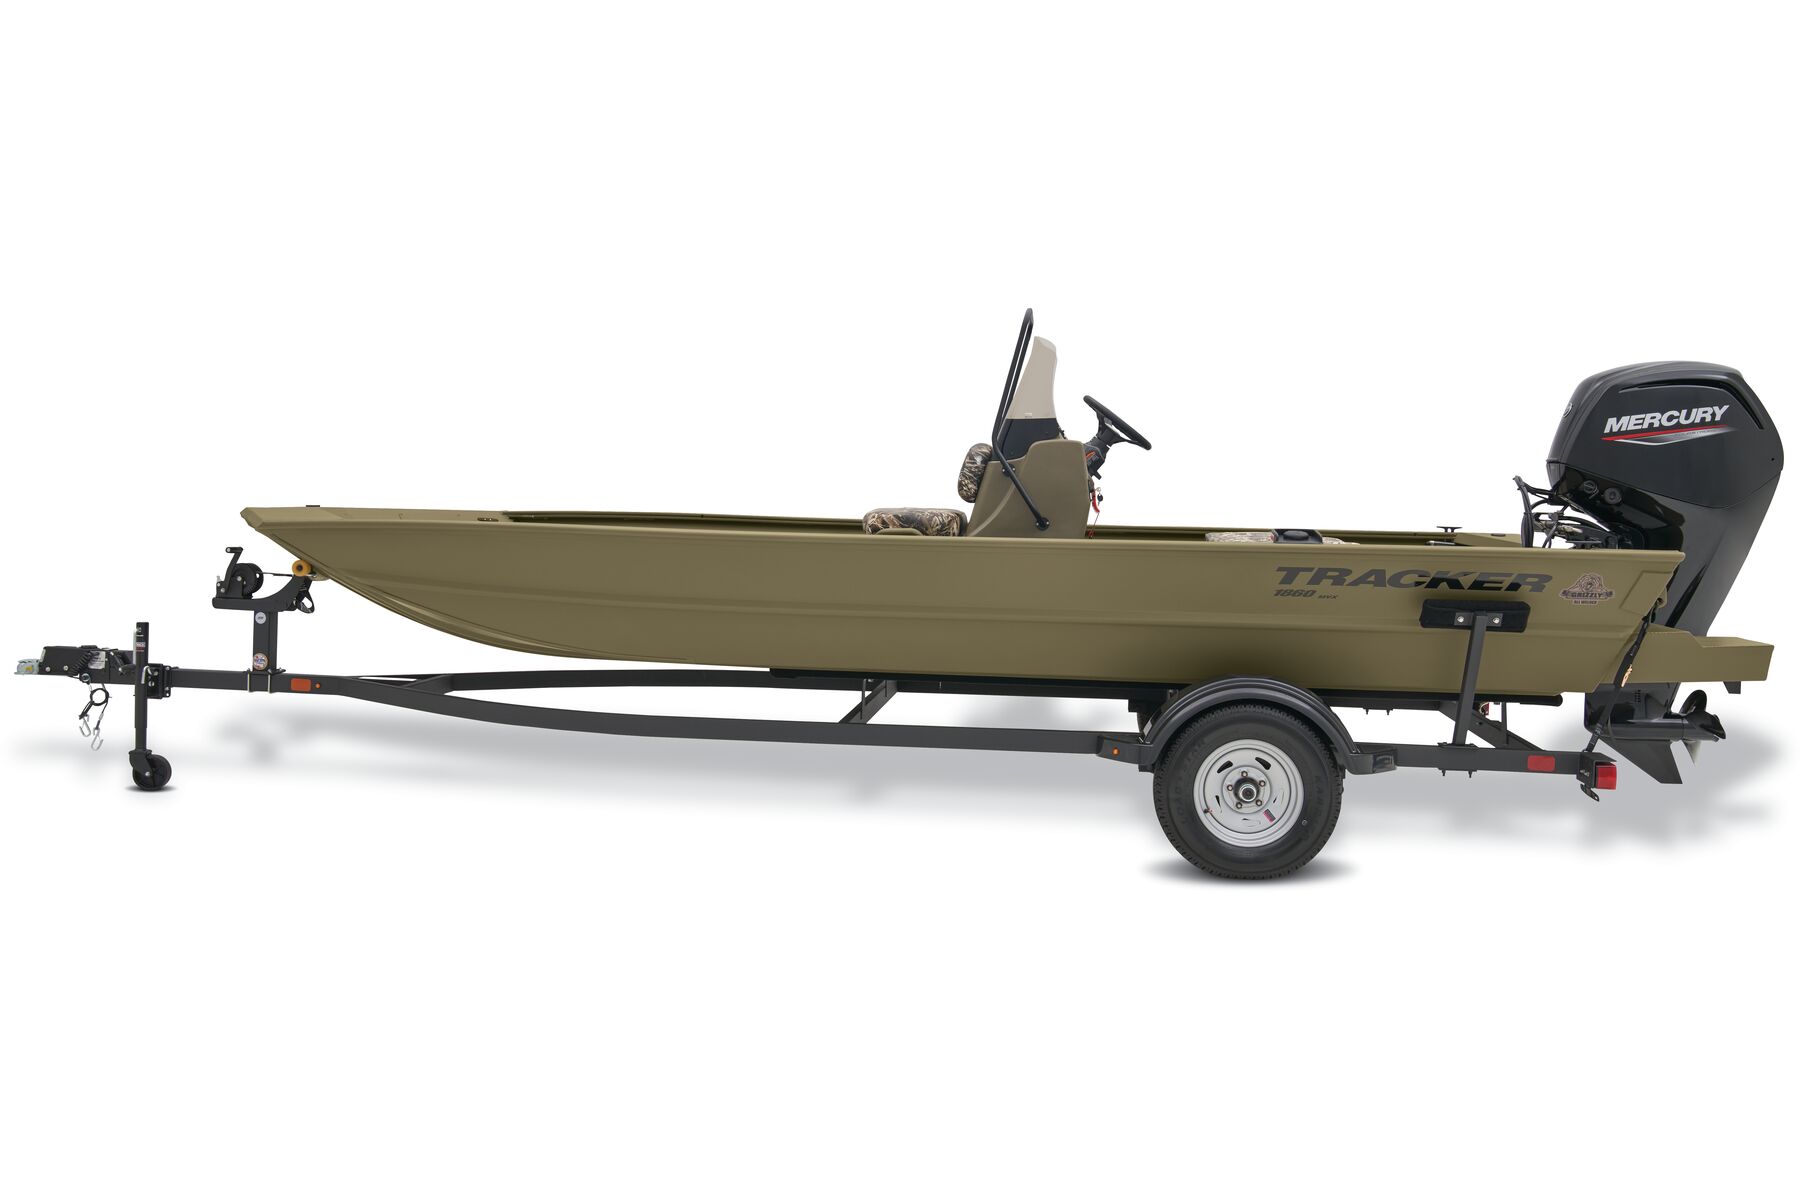 14-16ft V hull jon Boat build kit